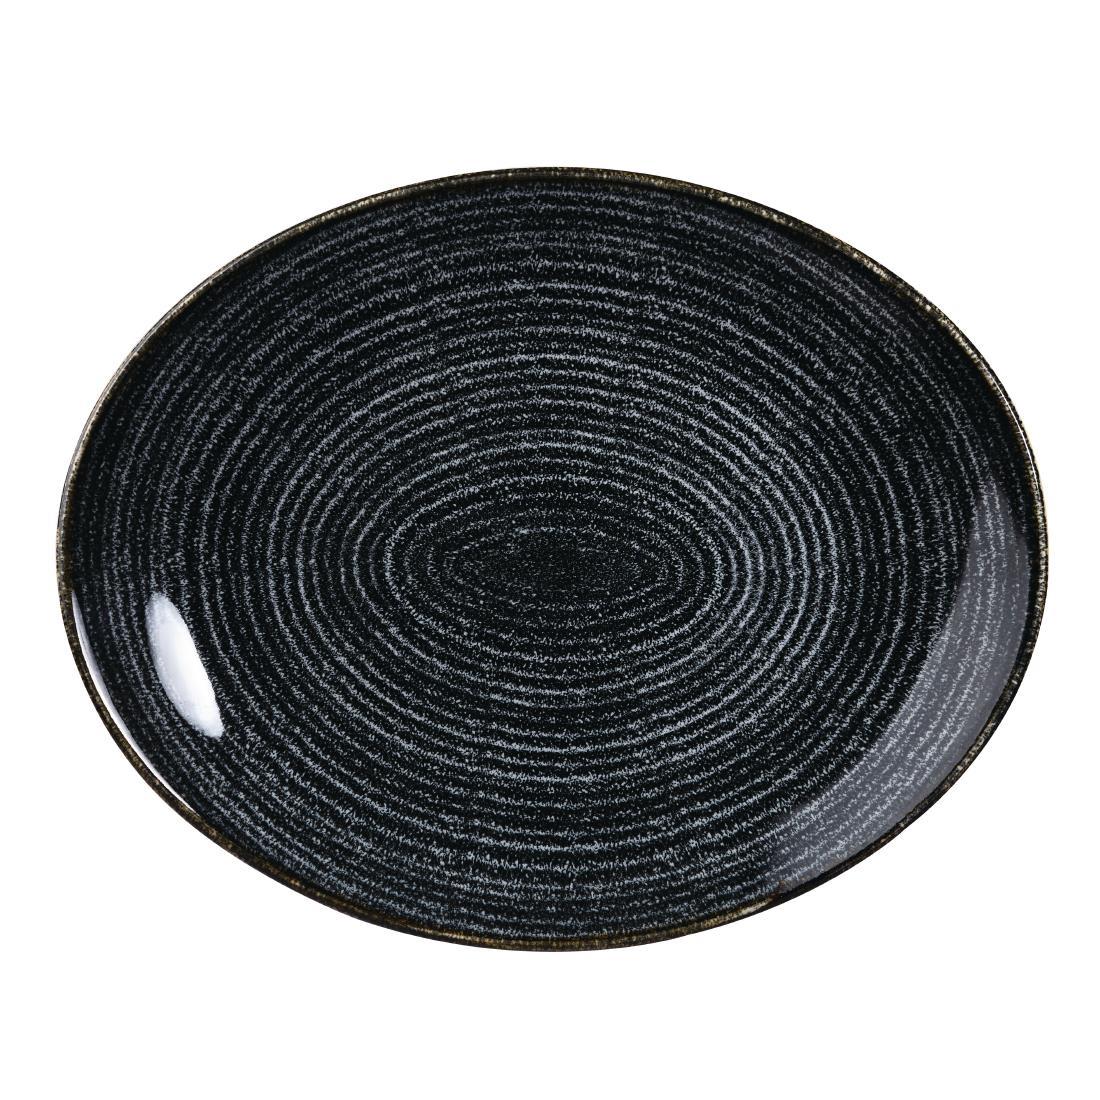 Churchill Studio Prints Homespun Charcoal Black Large Oval Coupe Plate 270 x 299mm - DA267  - 1